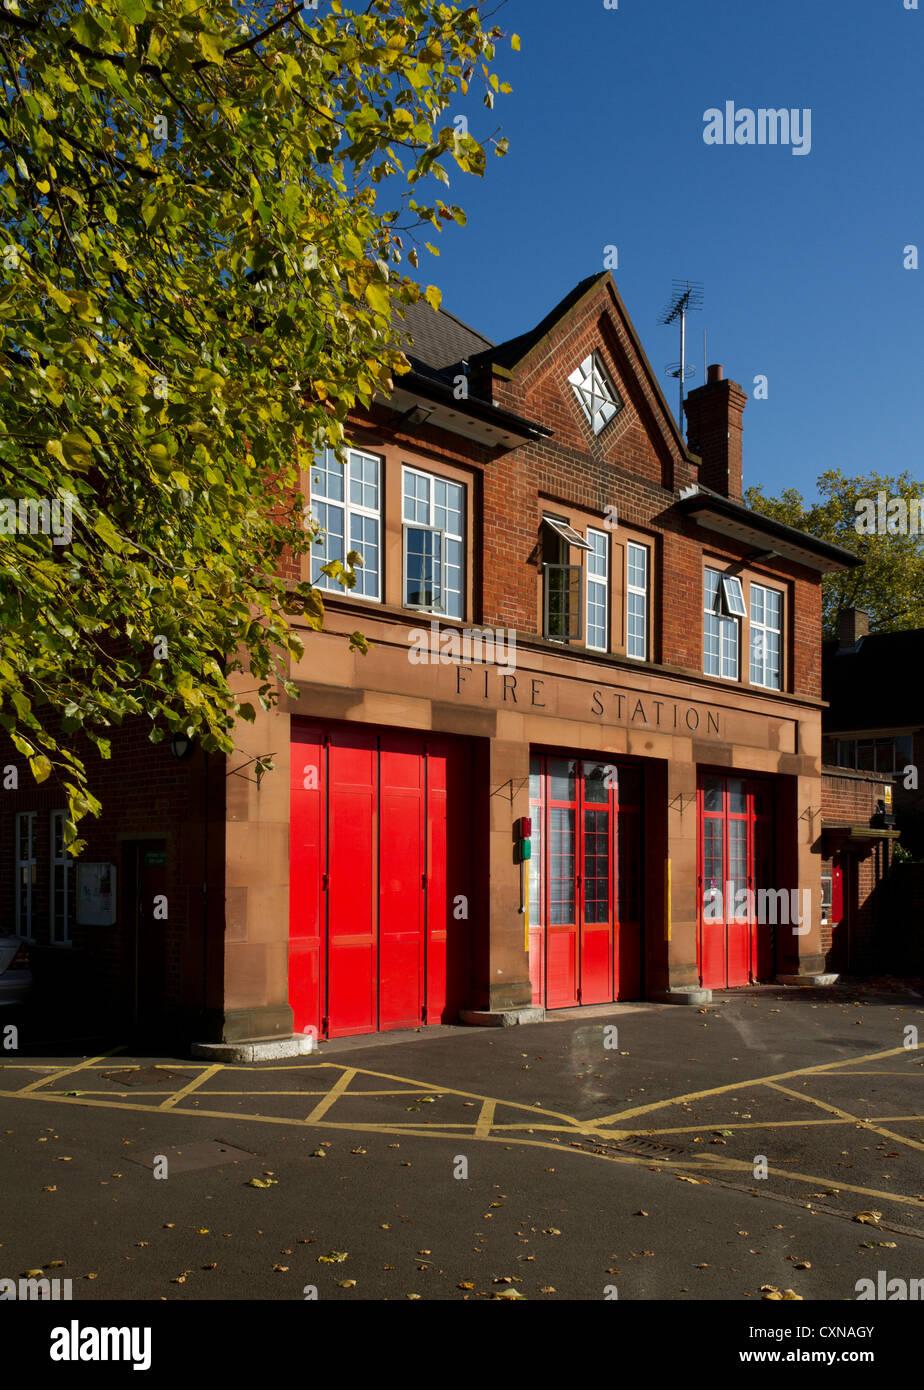 Fire Station, Mitcham, London, UK Banque D'Images